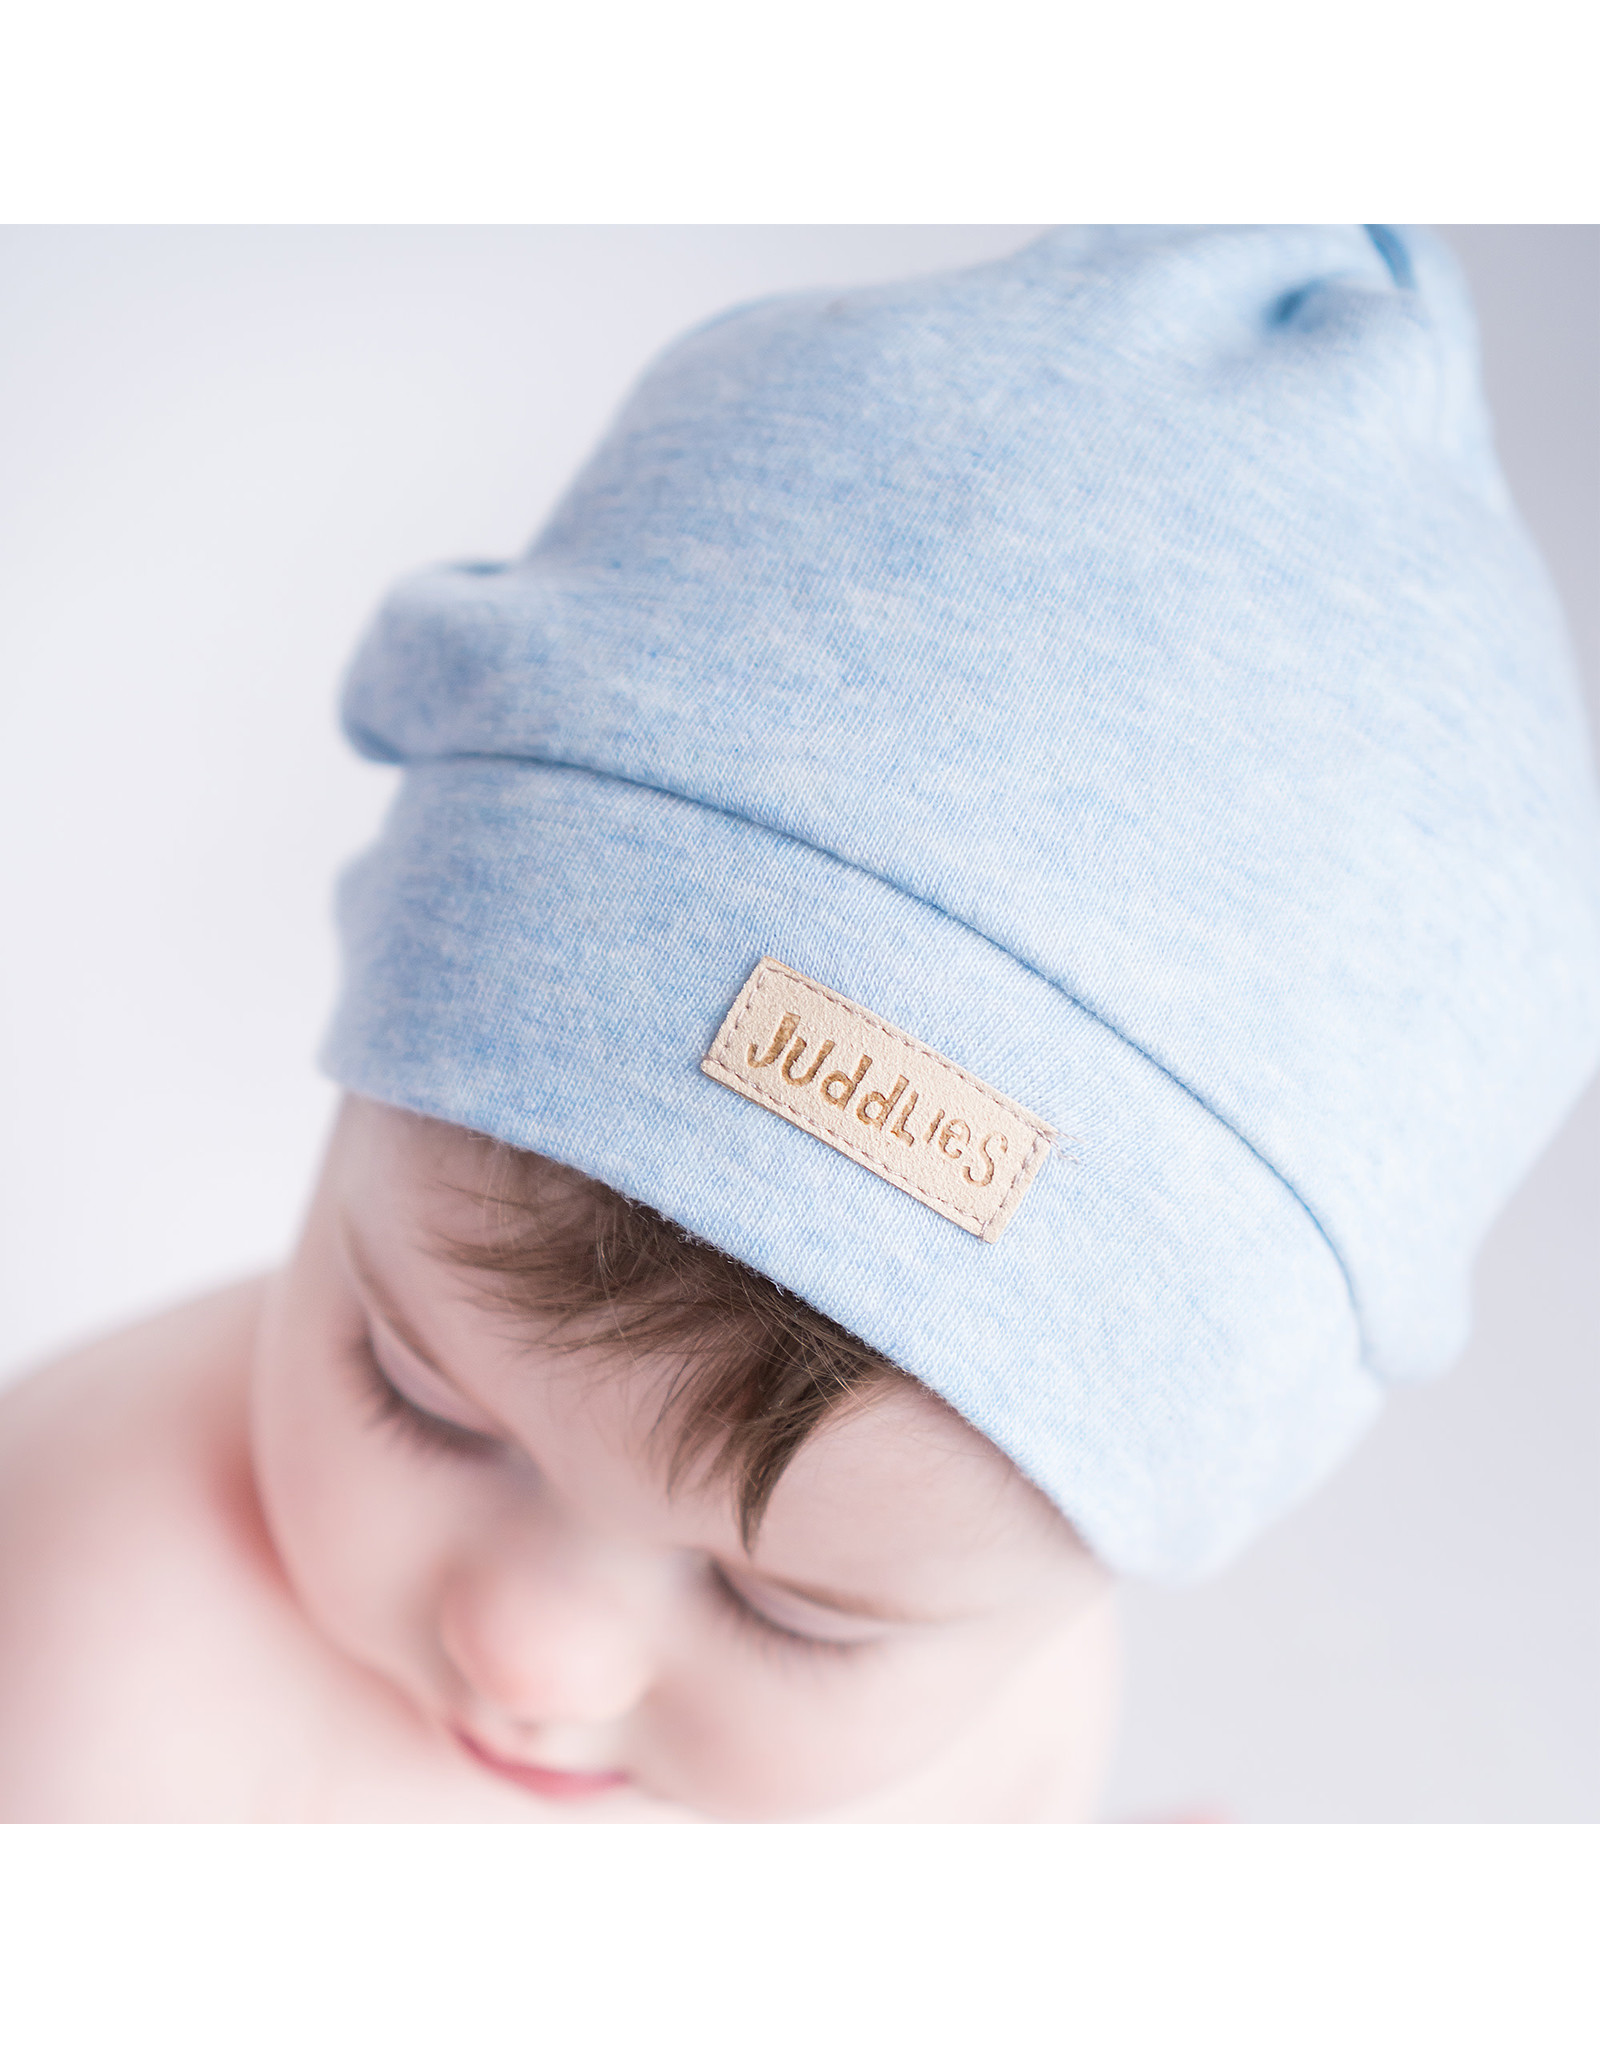 Juddlies Newborn Hat - Blue Fleck